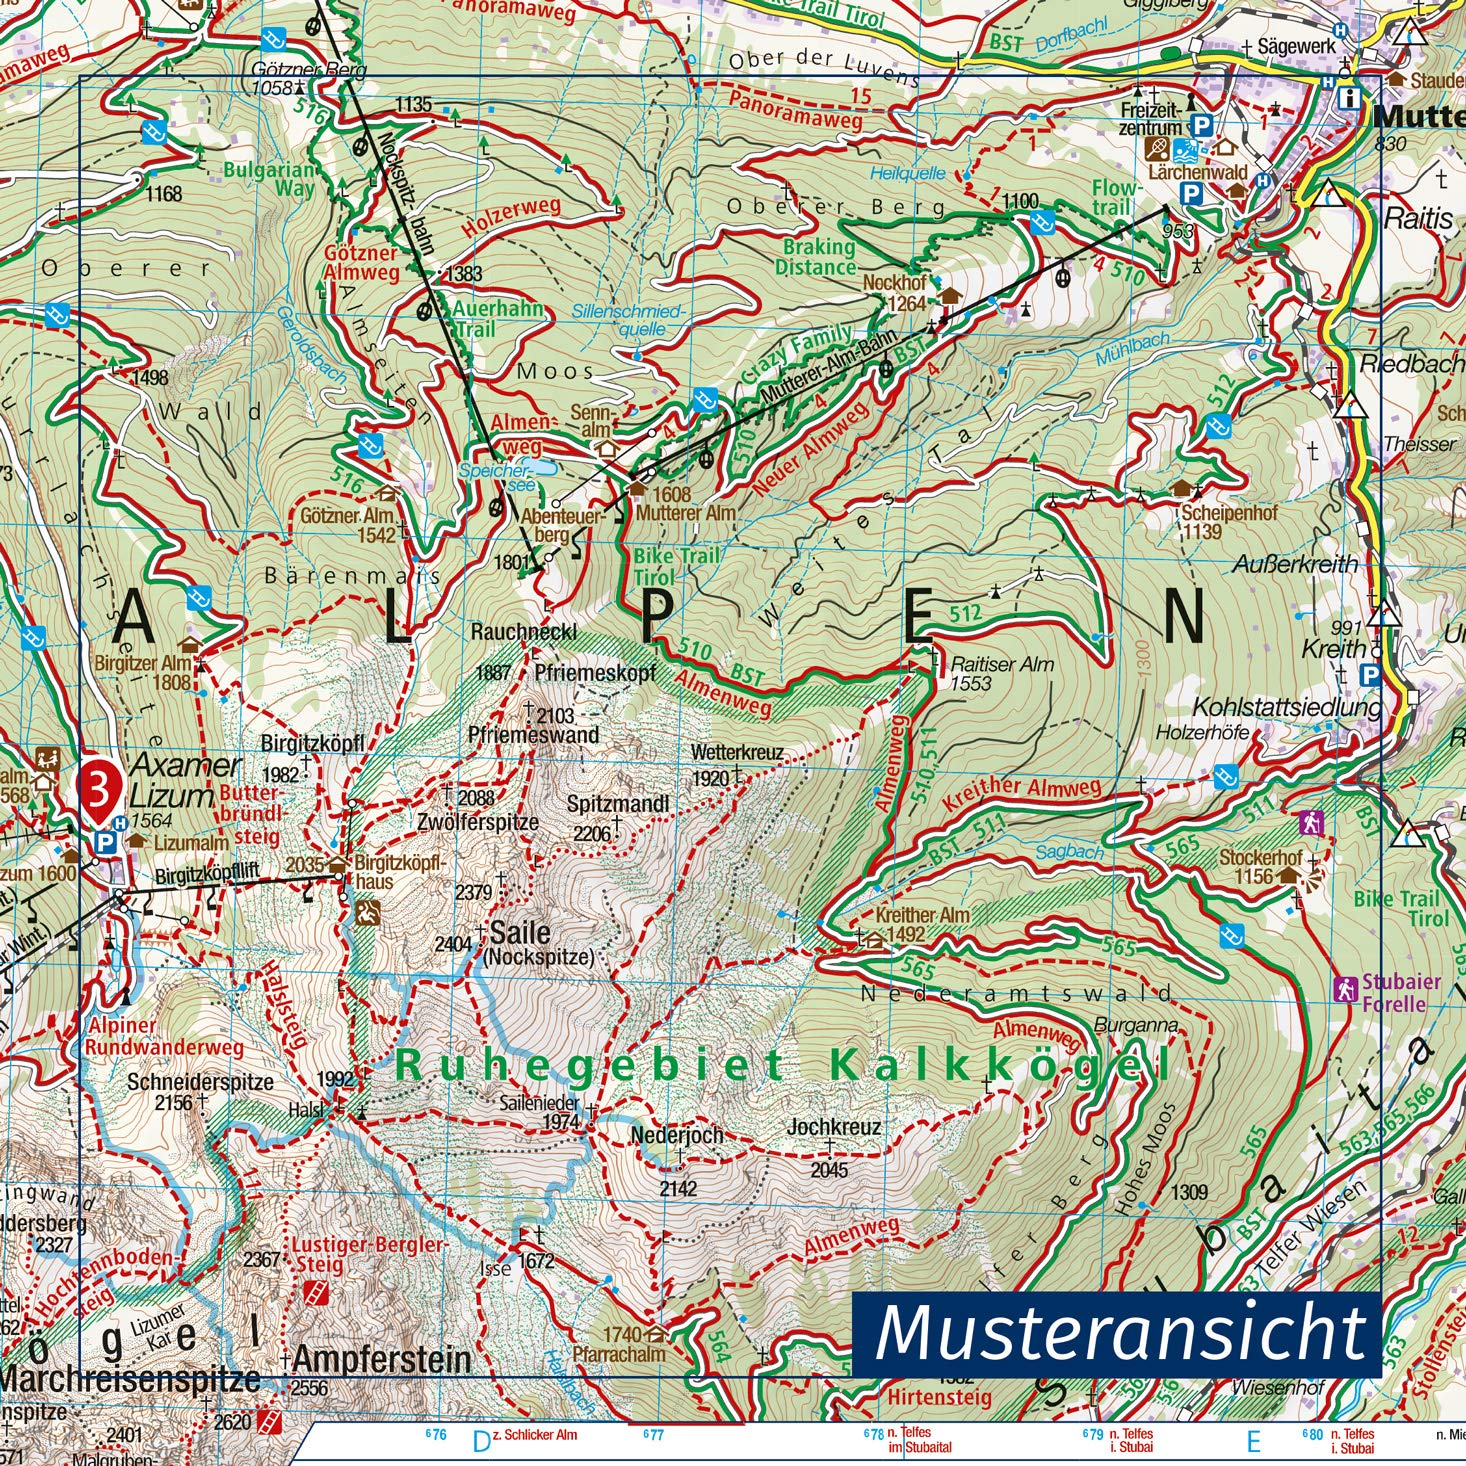 898 St.Blasien, Todtmoos, Hotzenwald 1:25.000 - Kompass Wanderkarte